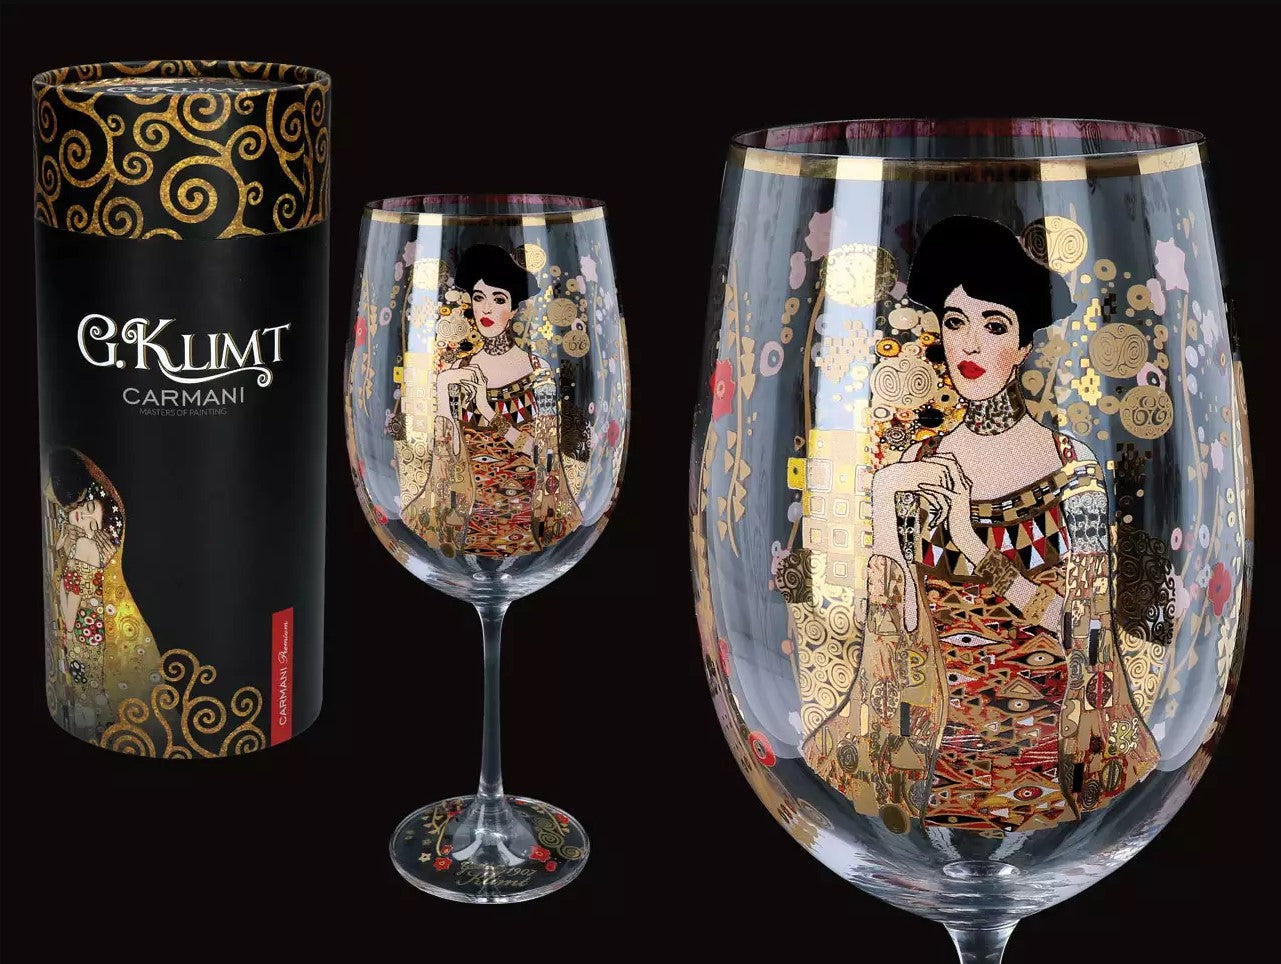 (CARMANI)  Gustav Klimt  ml640  כוס יין "אדל" גוסטב קלימט באריזת מתנה מפוארת כרמני